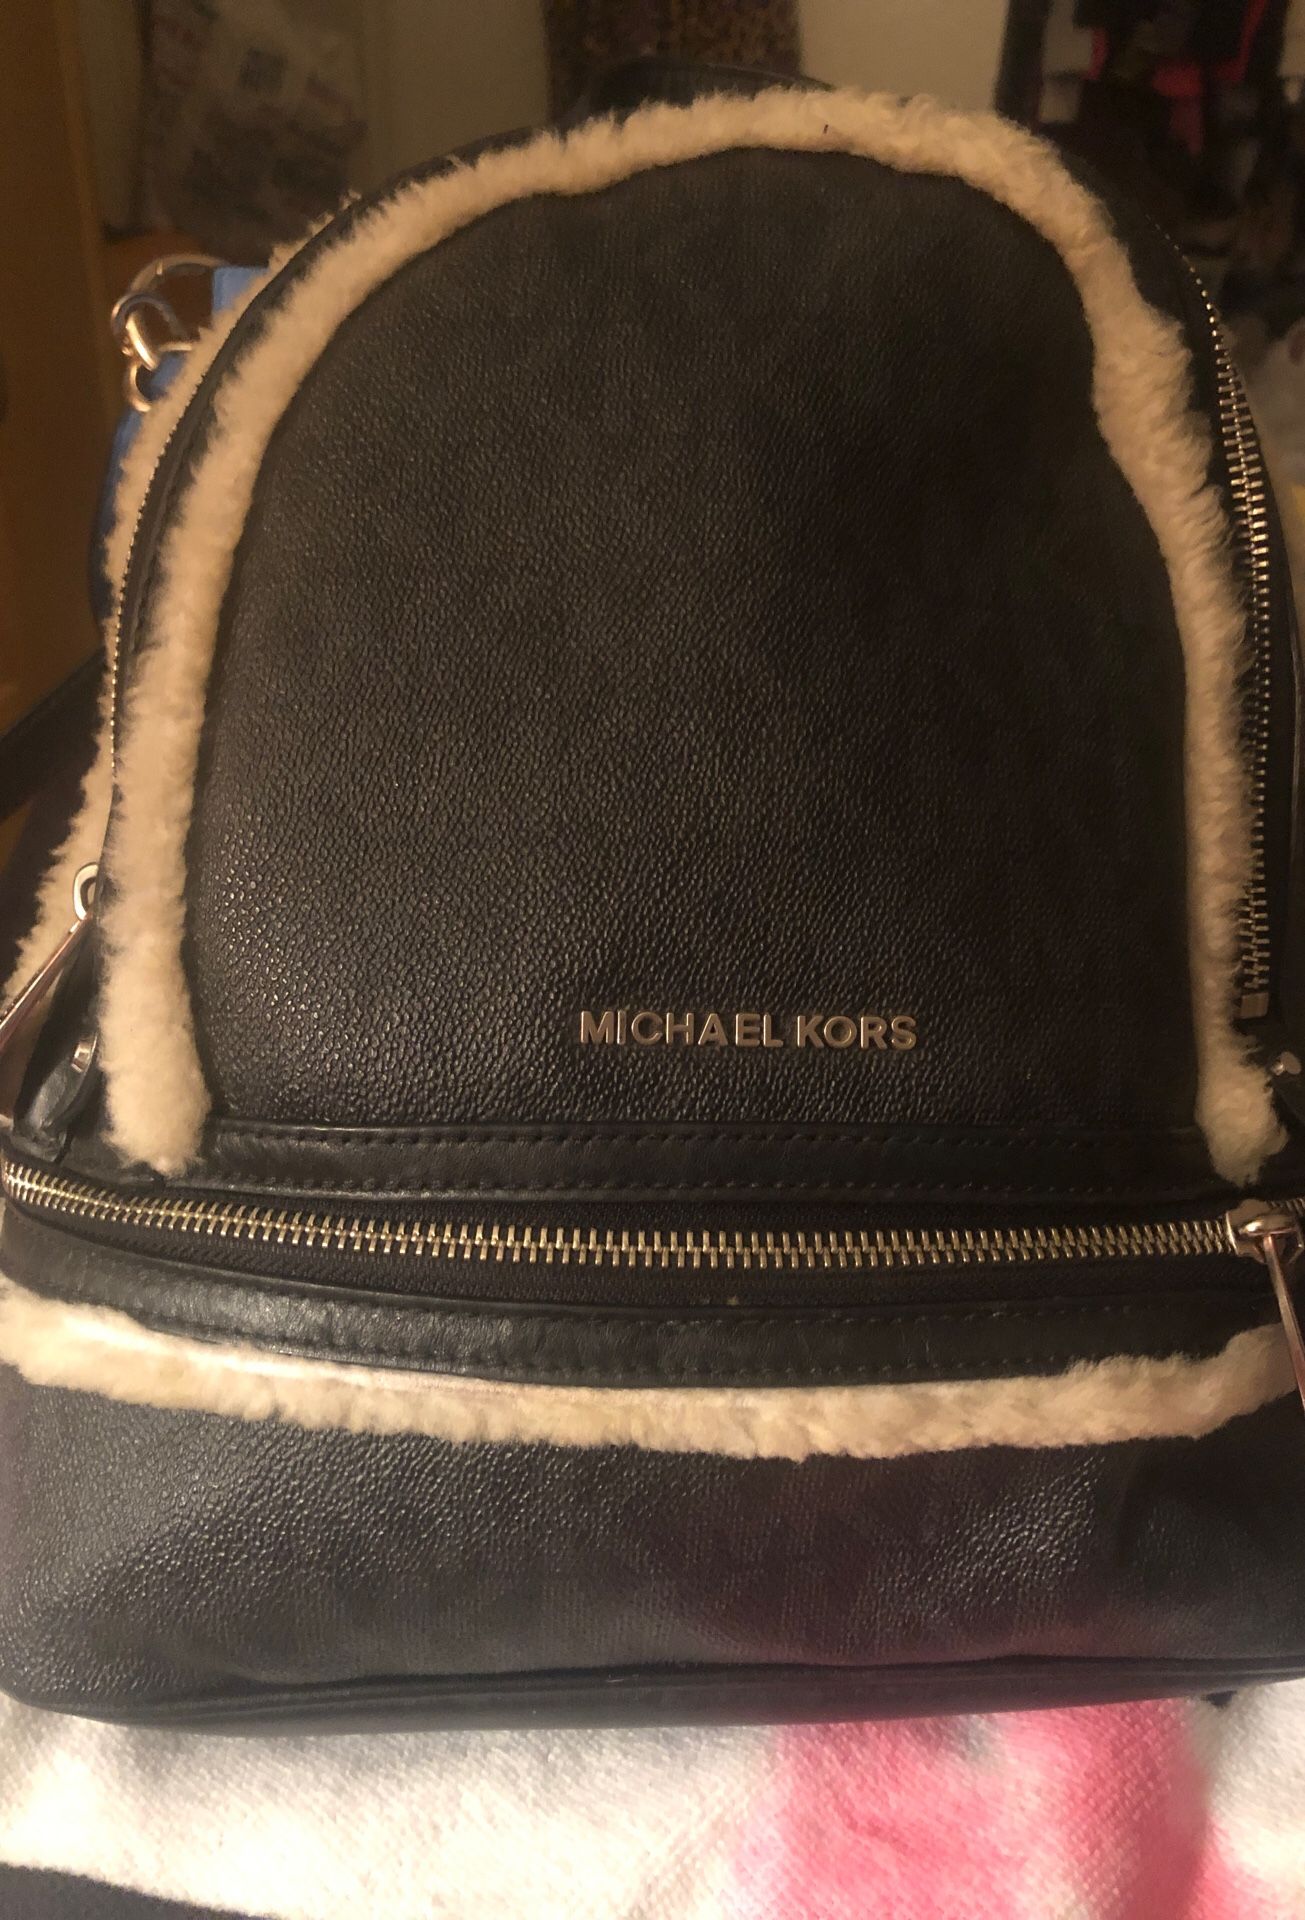 Michael Kors back pack/ purse